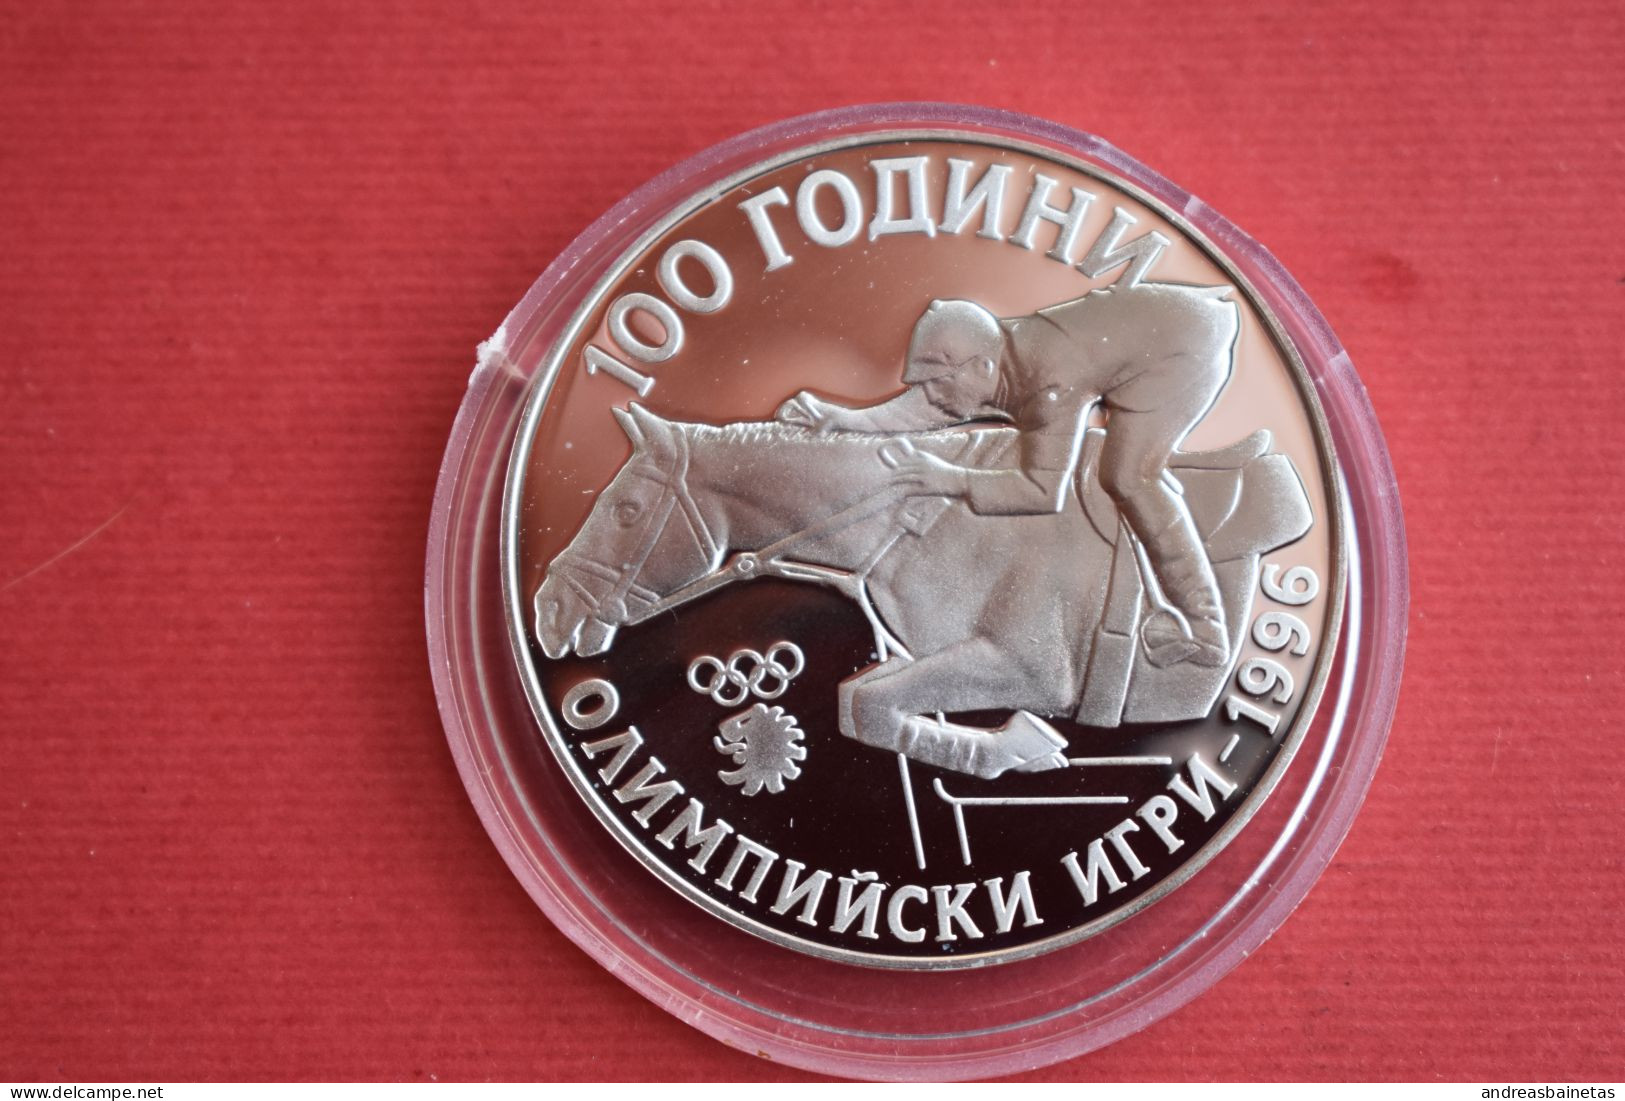 Coins Bulgaria  1000 Leva 100 Years Olympic Games 1995 KM# 215 - Bulgarien